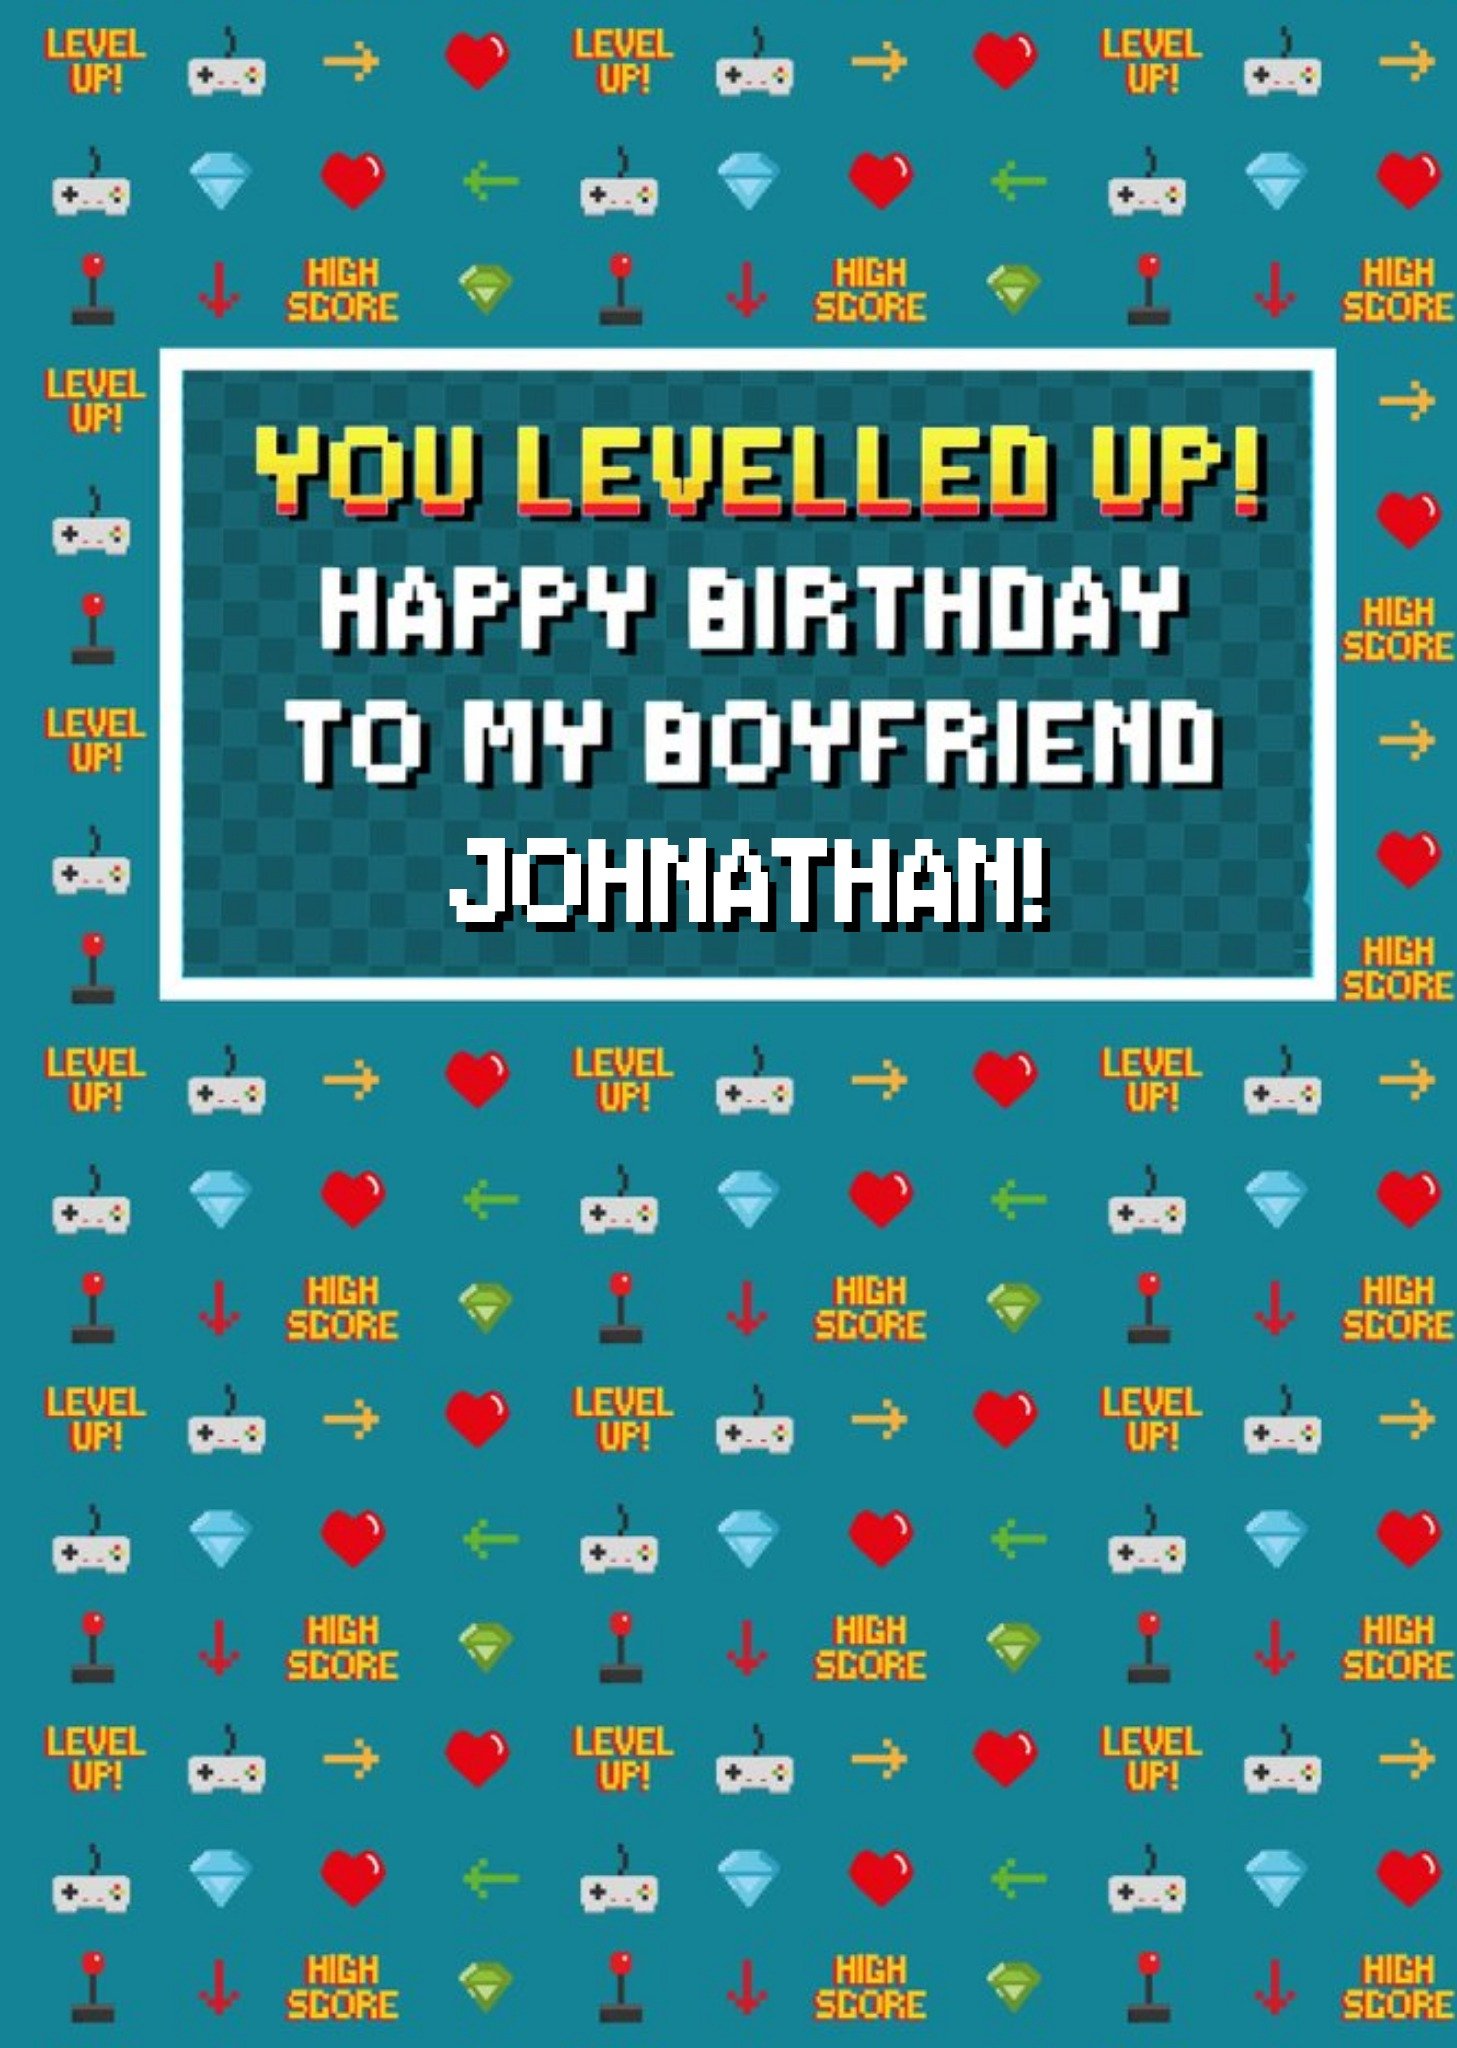 Moonpig Pixel Gaming Level Up Boyfriend Happy Birthday Card, Large